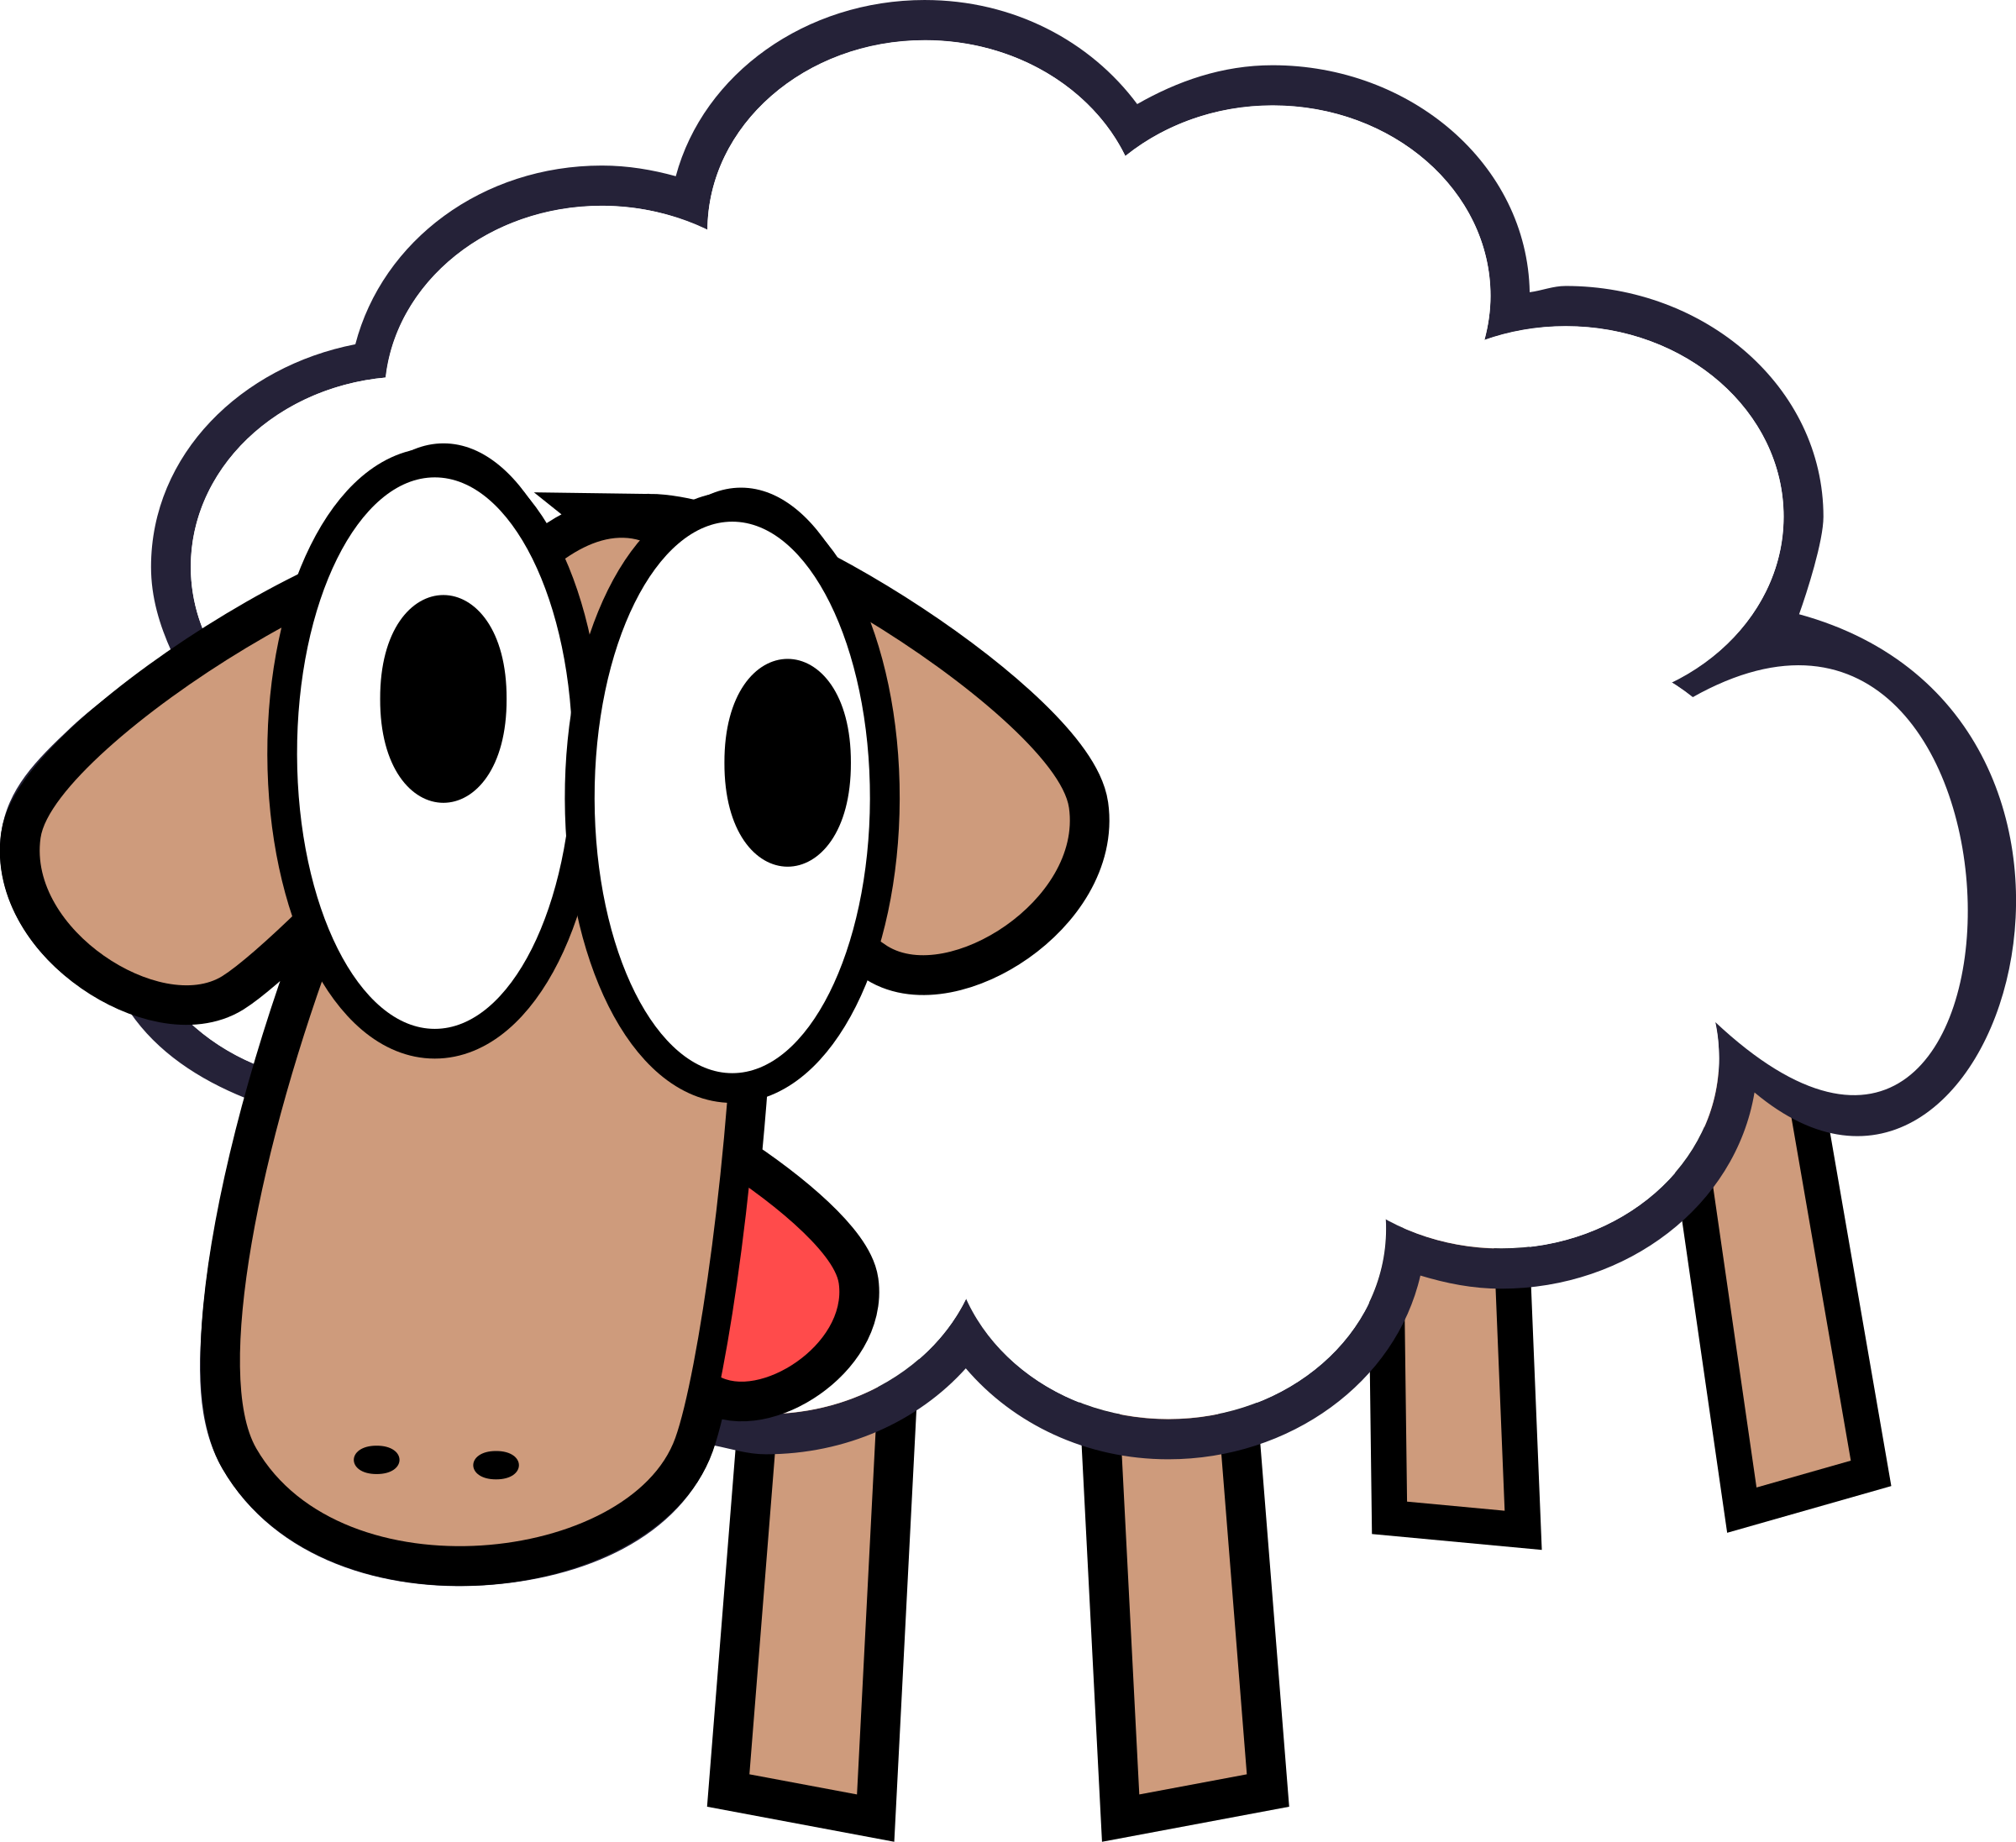 Png Sheep Cartoon - Big Image (Png), Transparent background PNG HD thumbnail